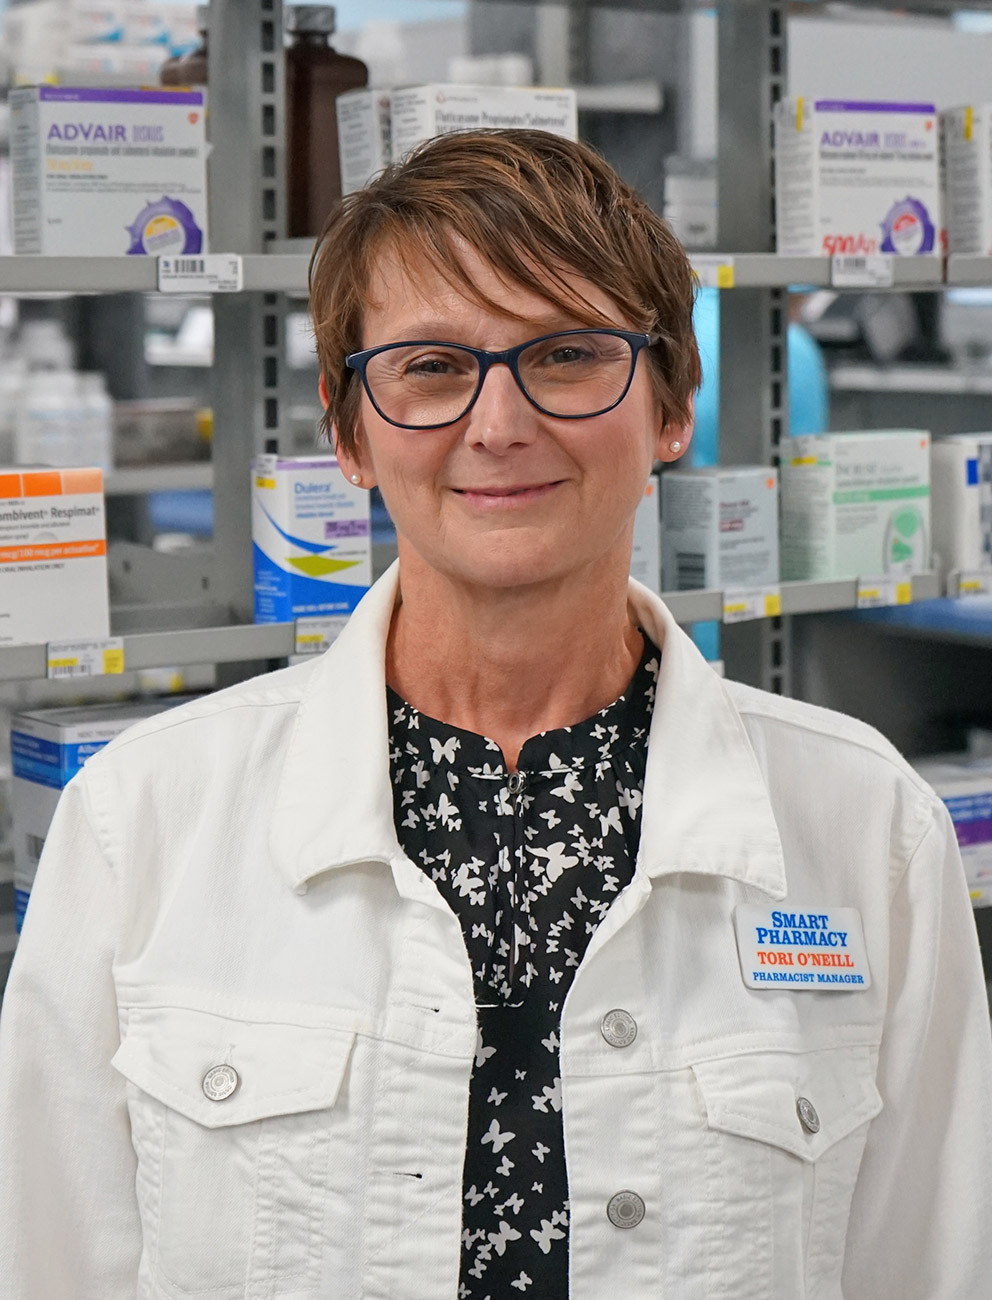 Pharmacist Manager Tori O'Neill Franklin NC